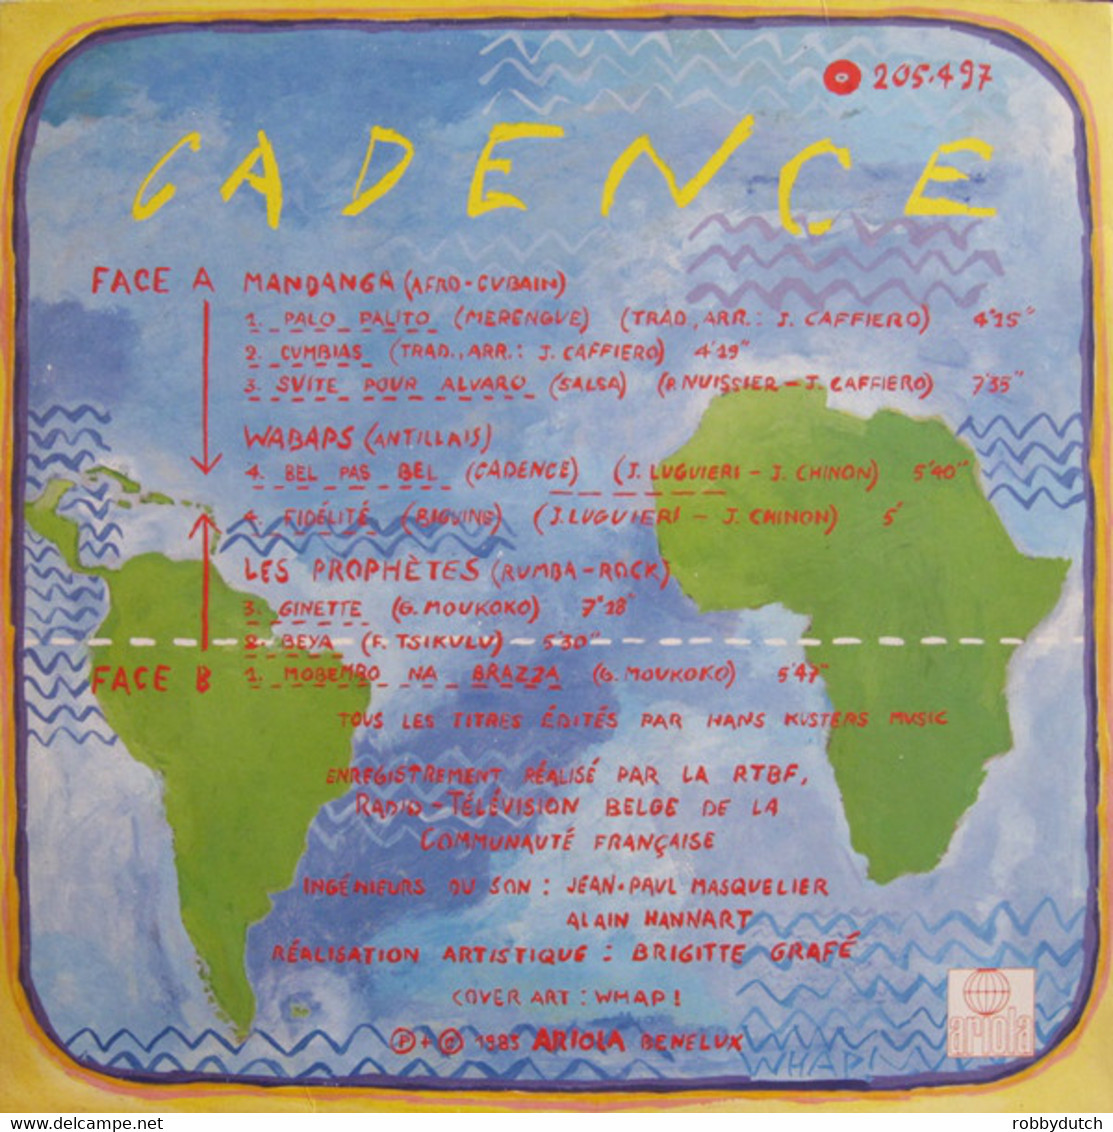 * LP * CADENCE - VARIOUS ARTISTS (Holland 1983 EX!!) - Música Del Mundo